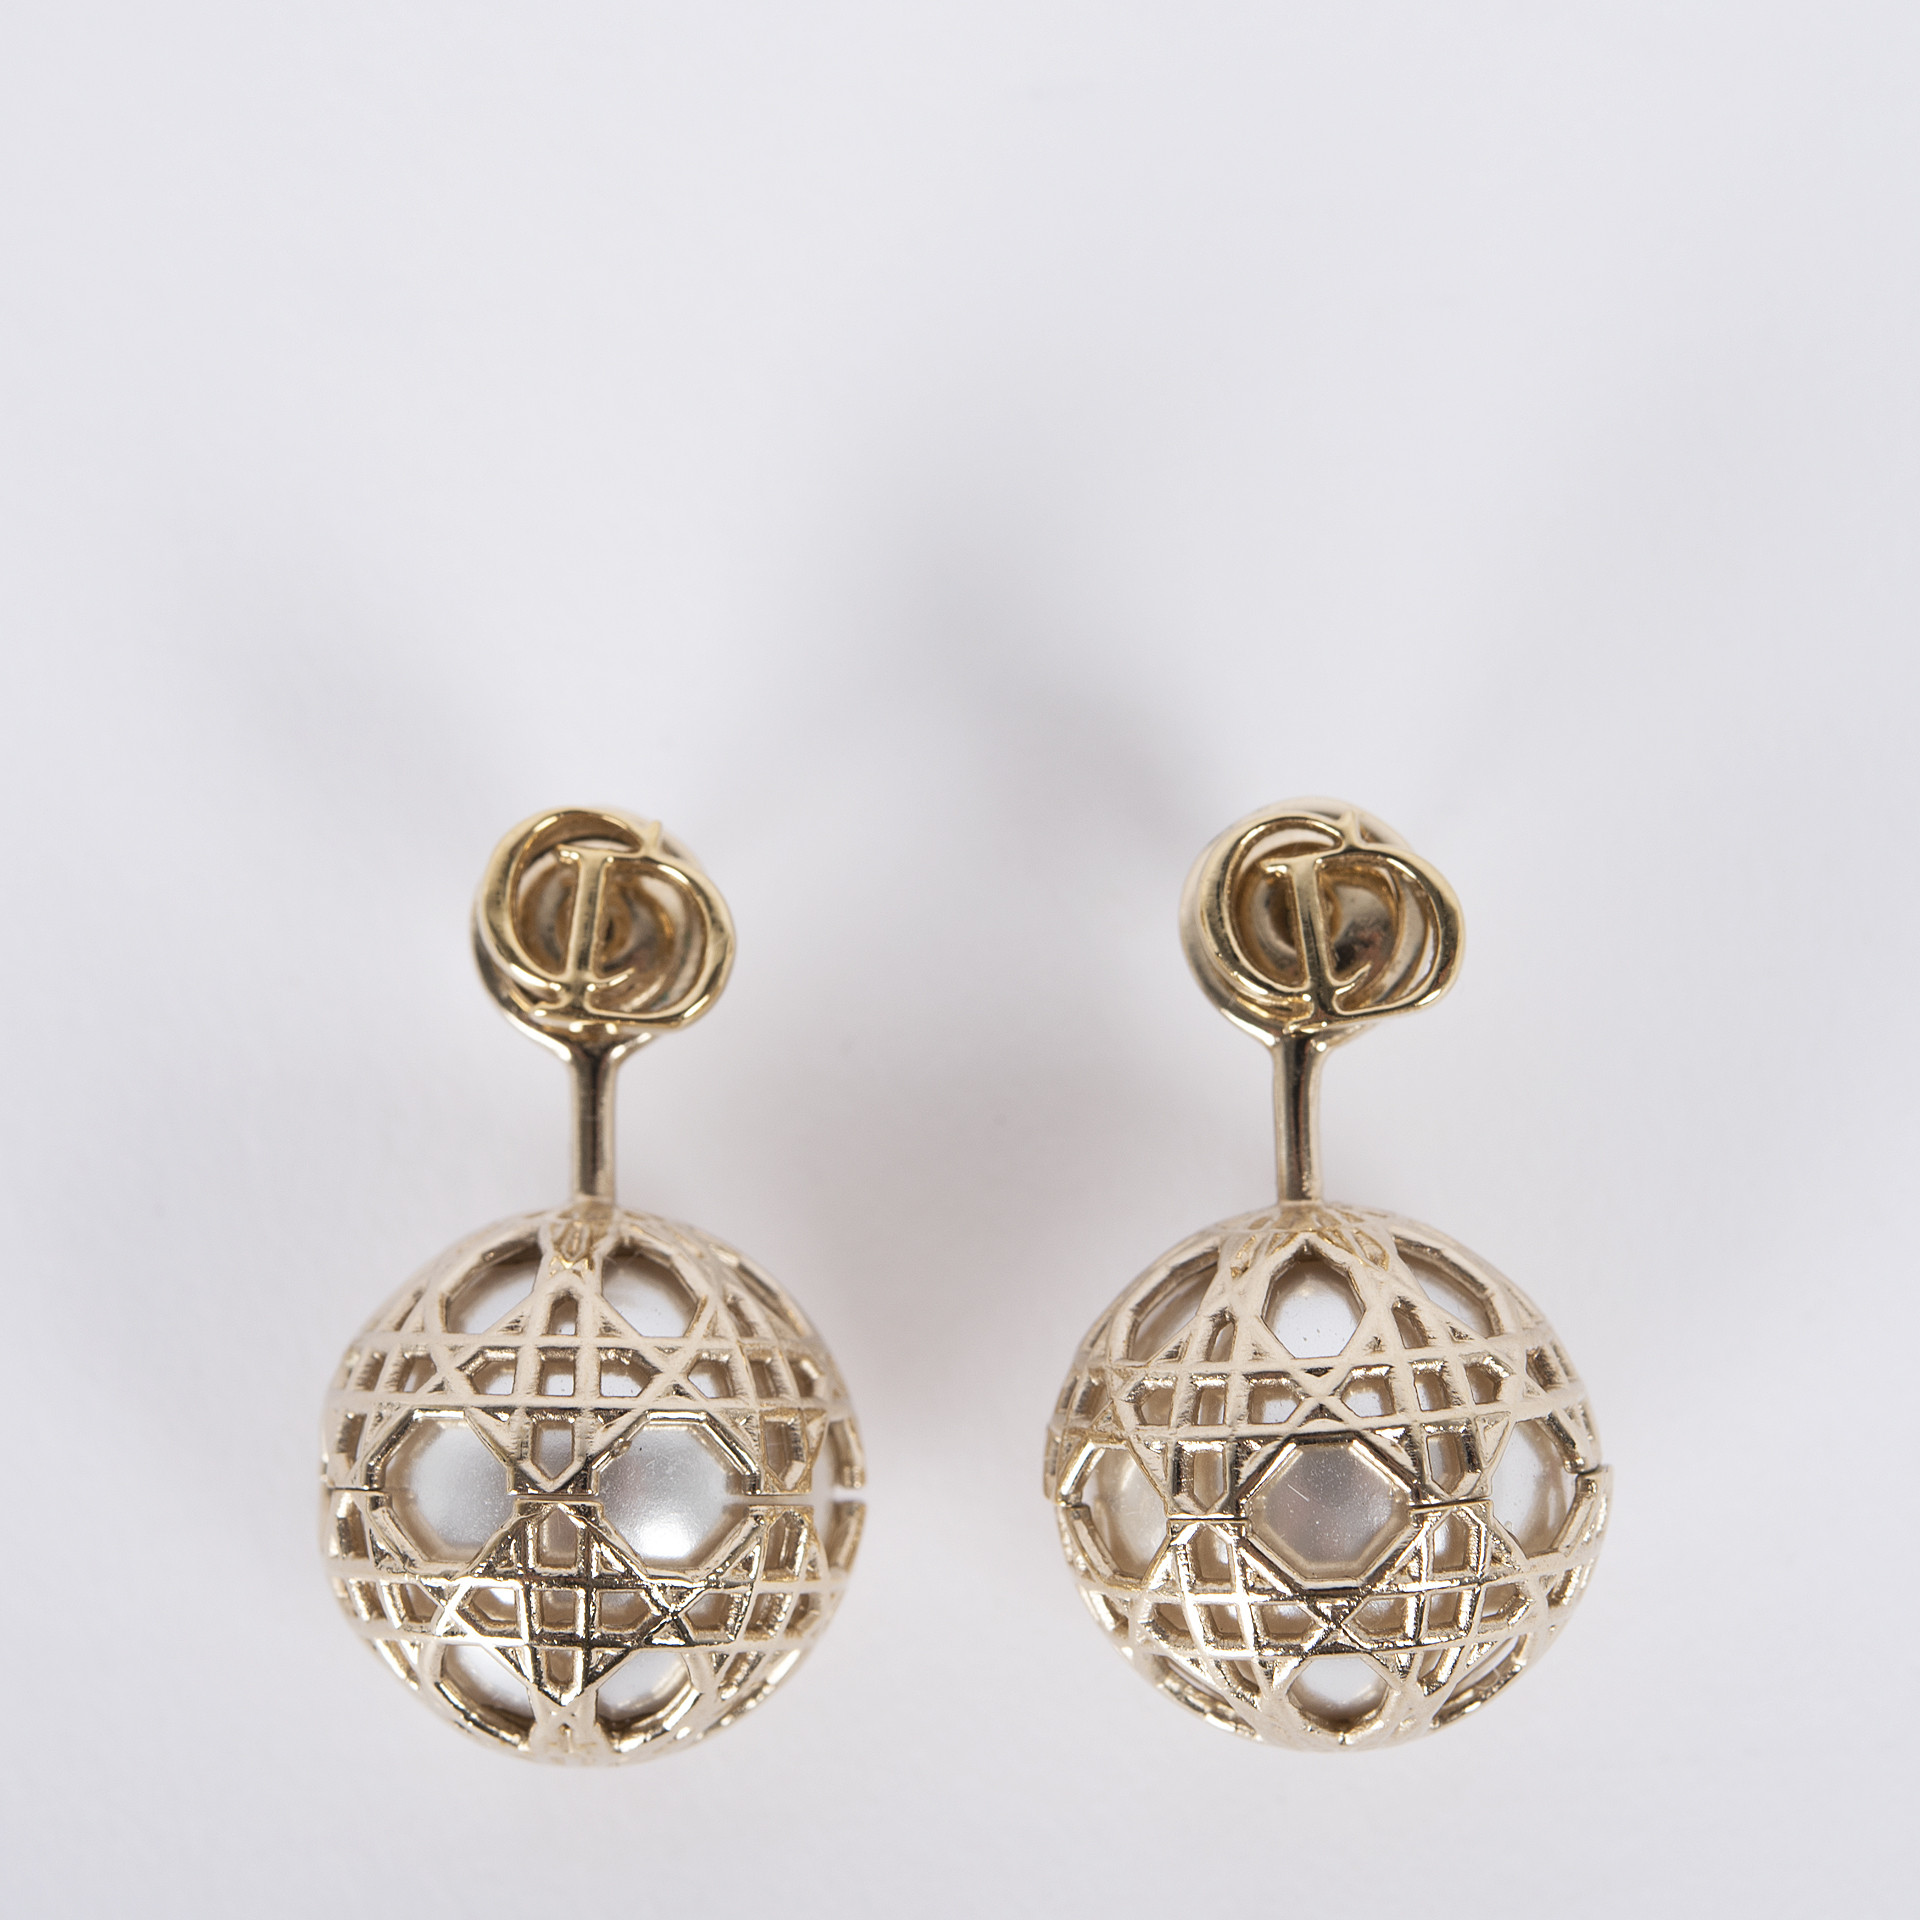 Christian Dior Tribal Earrings
 CHRISTIAN DIOR Pearl Cannage Mise En Dior Tribal Earrings Gold